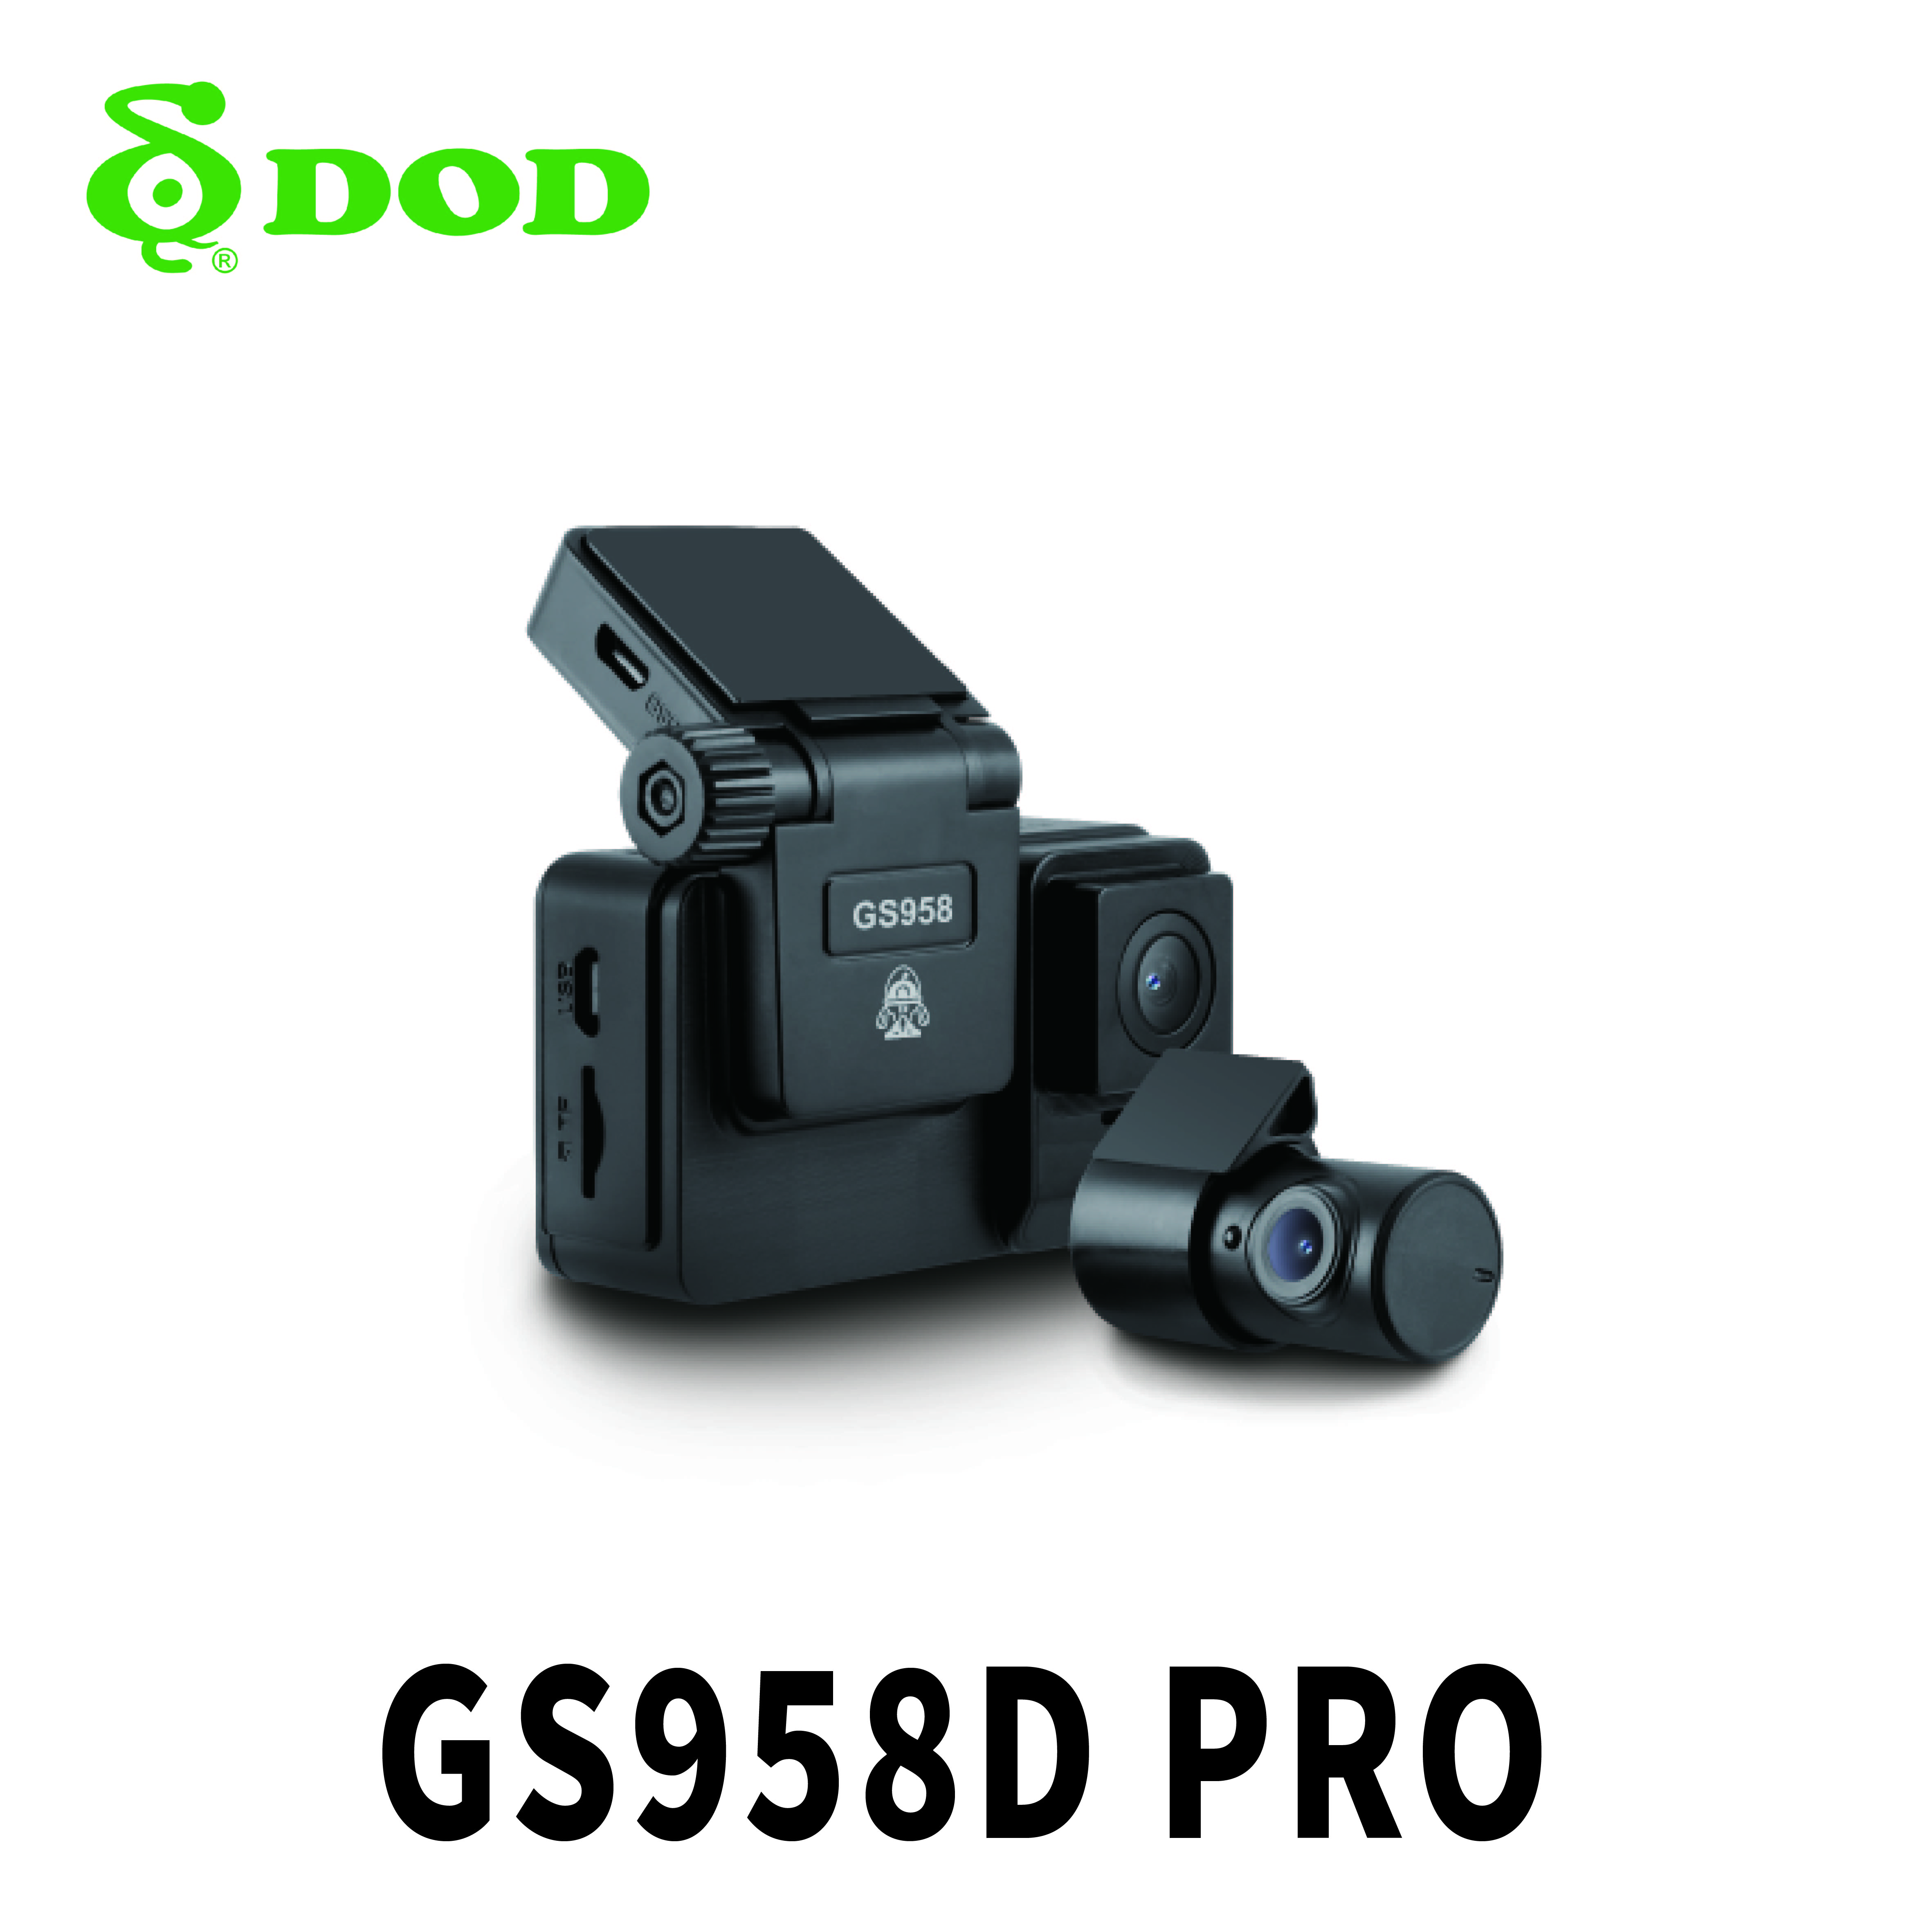 DOD GS958D PRO 1080p 觸控式 GPS 區間測速 雙鏡頭行車記錄器